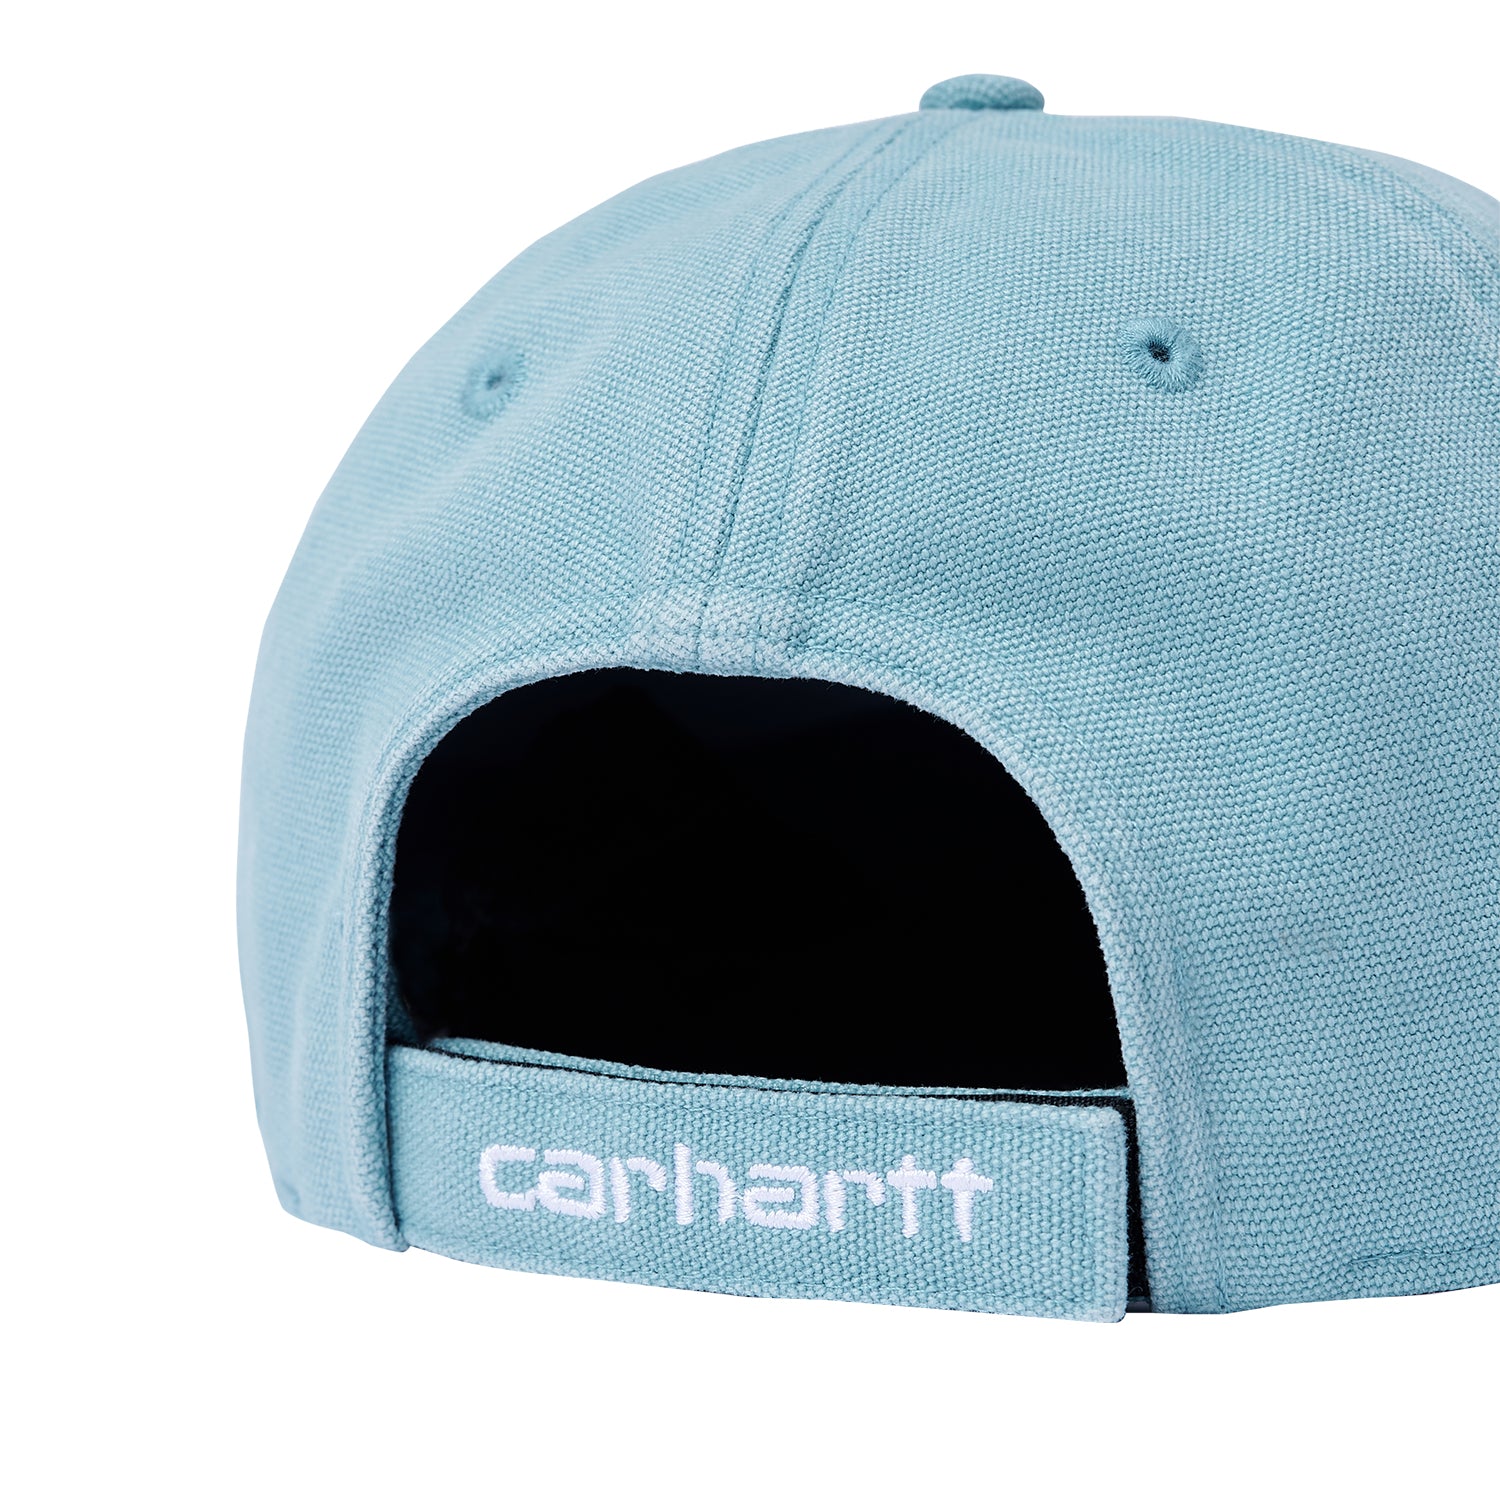 CANVAS 6-PANEL CAP - Nile Blue / White